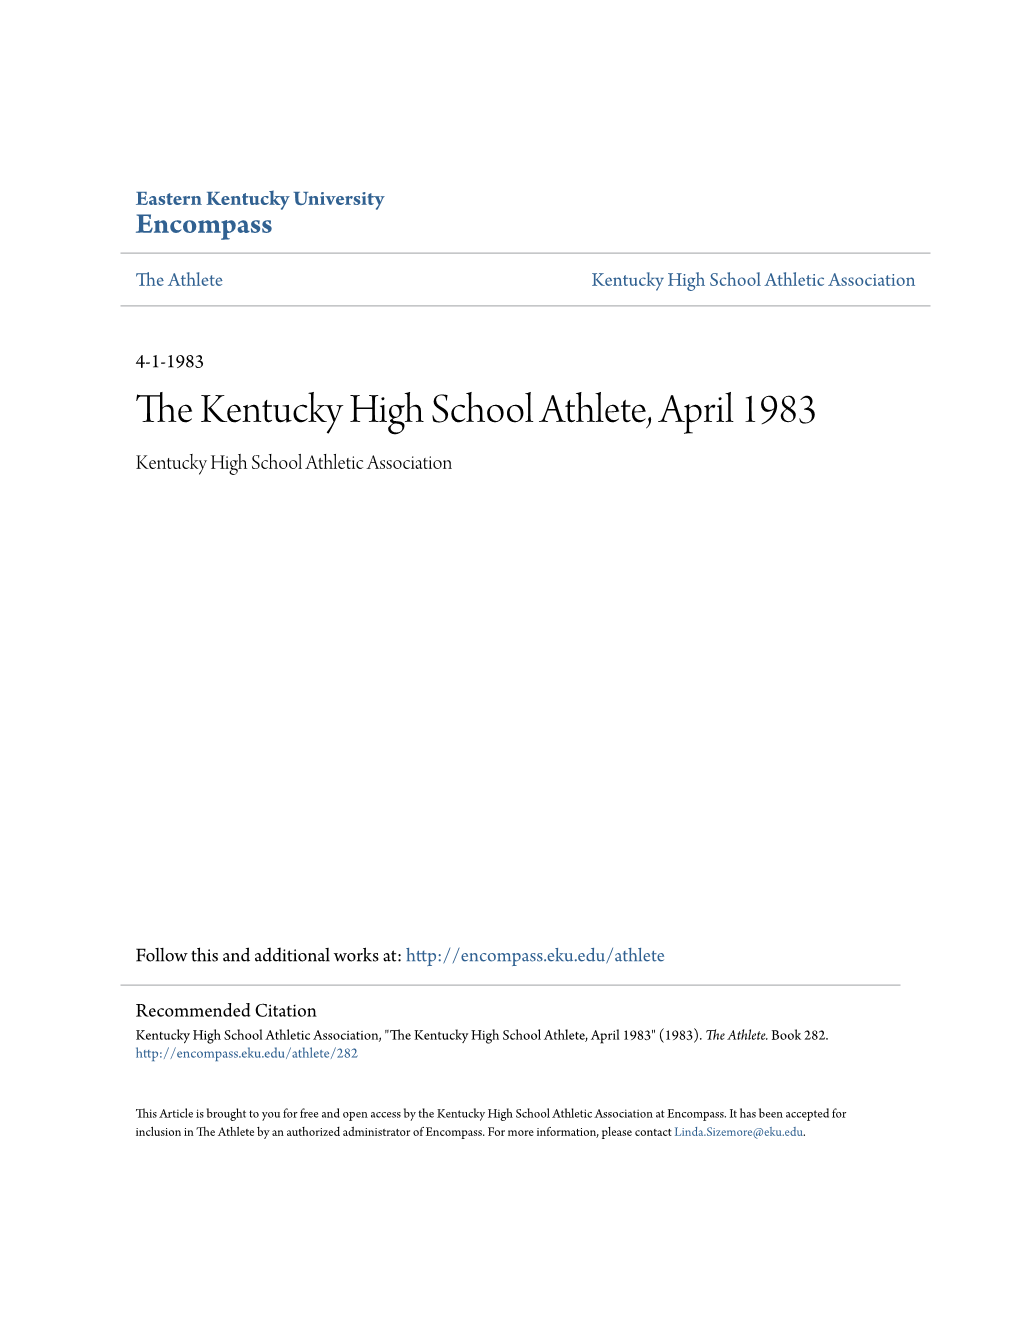 The Kentucky High School Athlete, April 1983 Kentucky High School Athletic Association